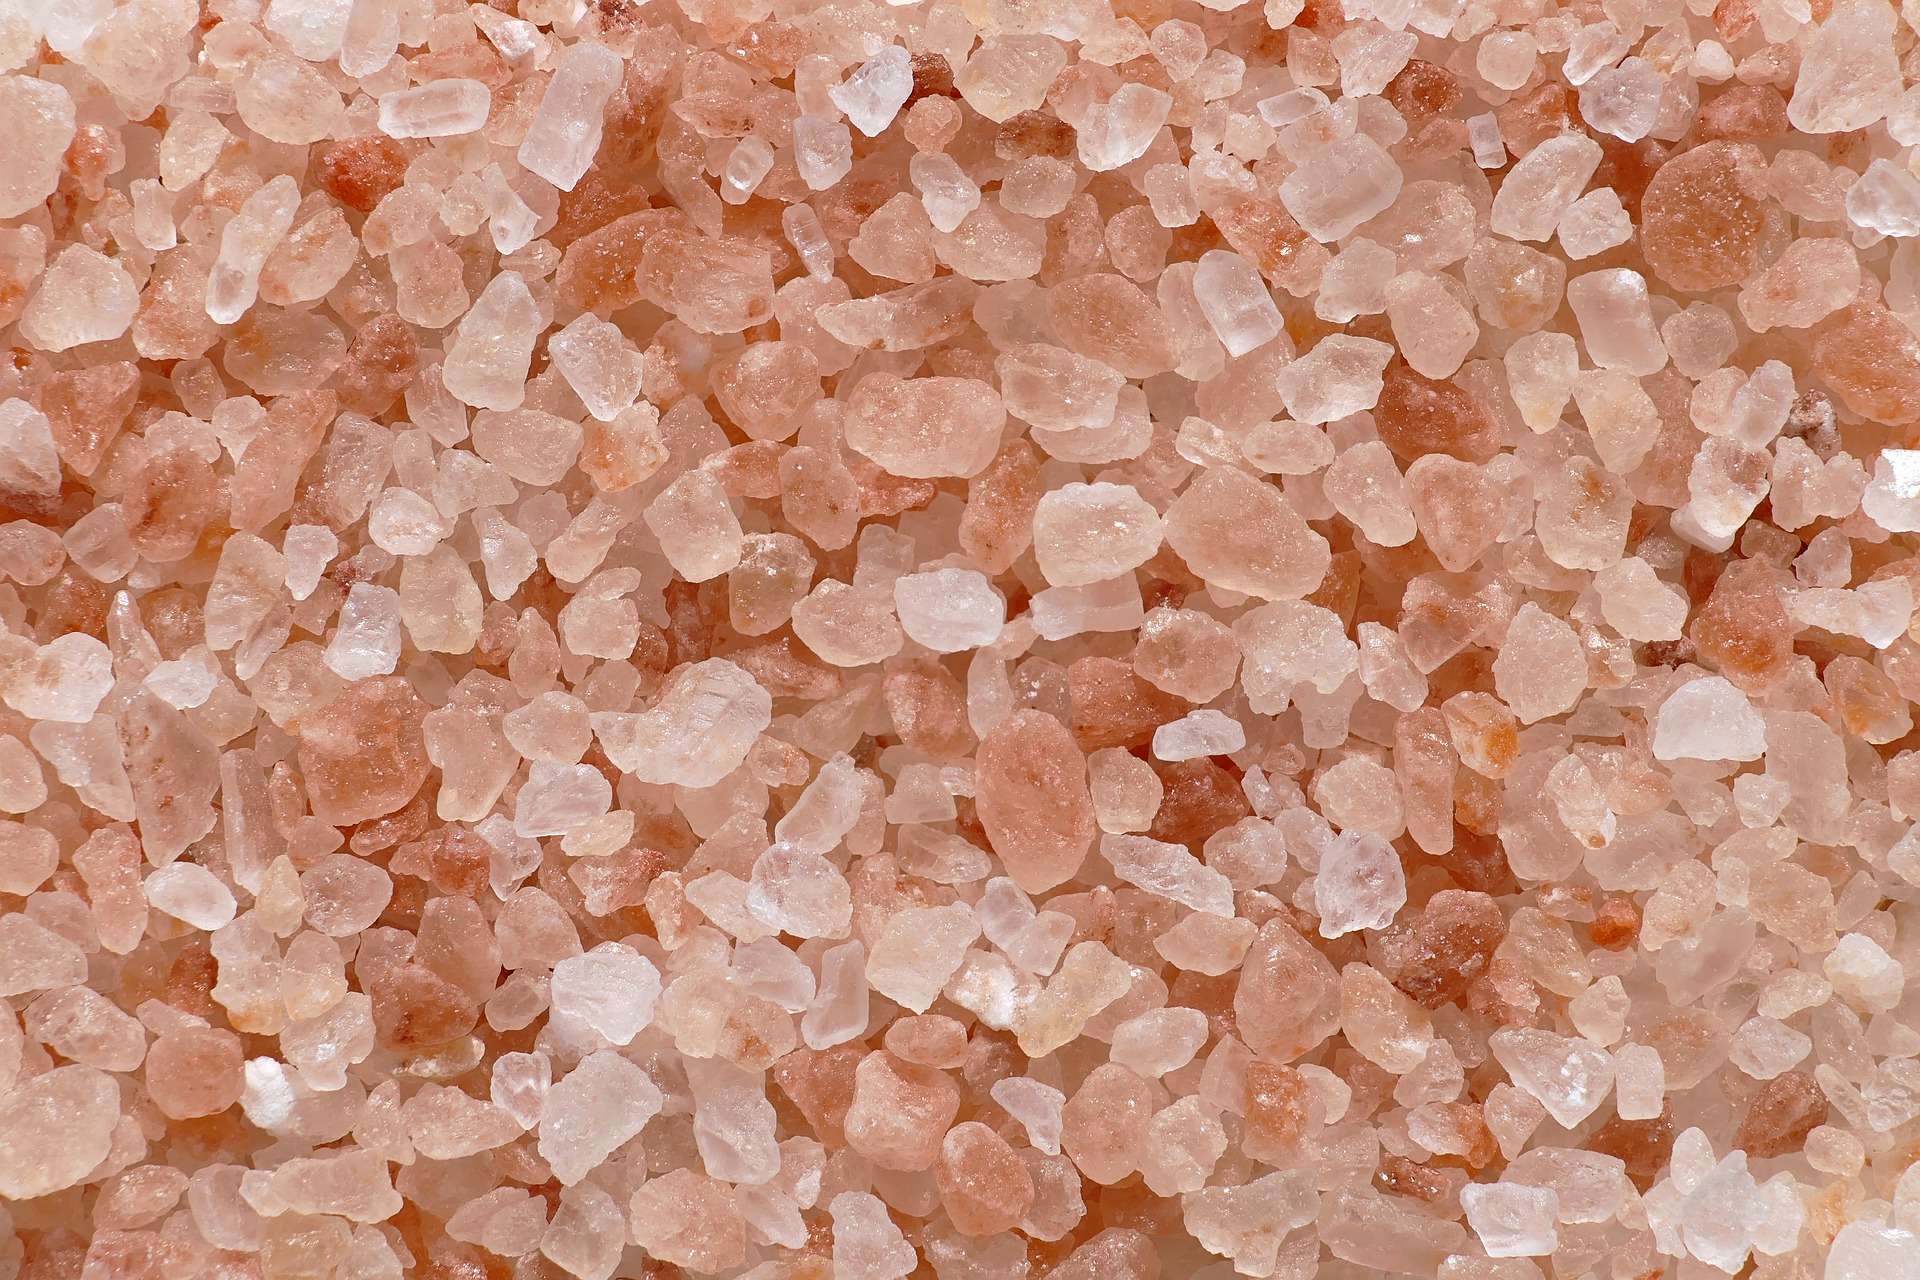 himalayn salt